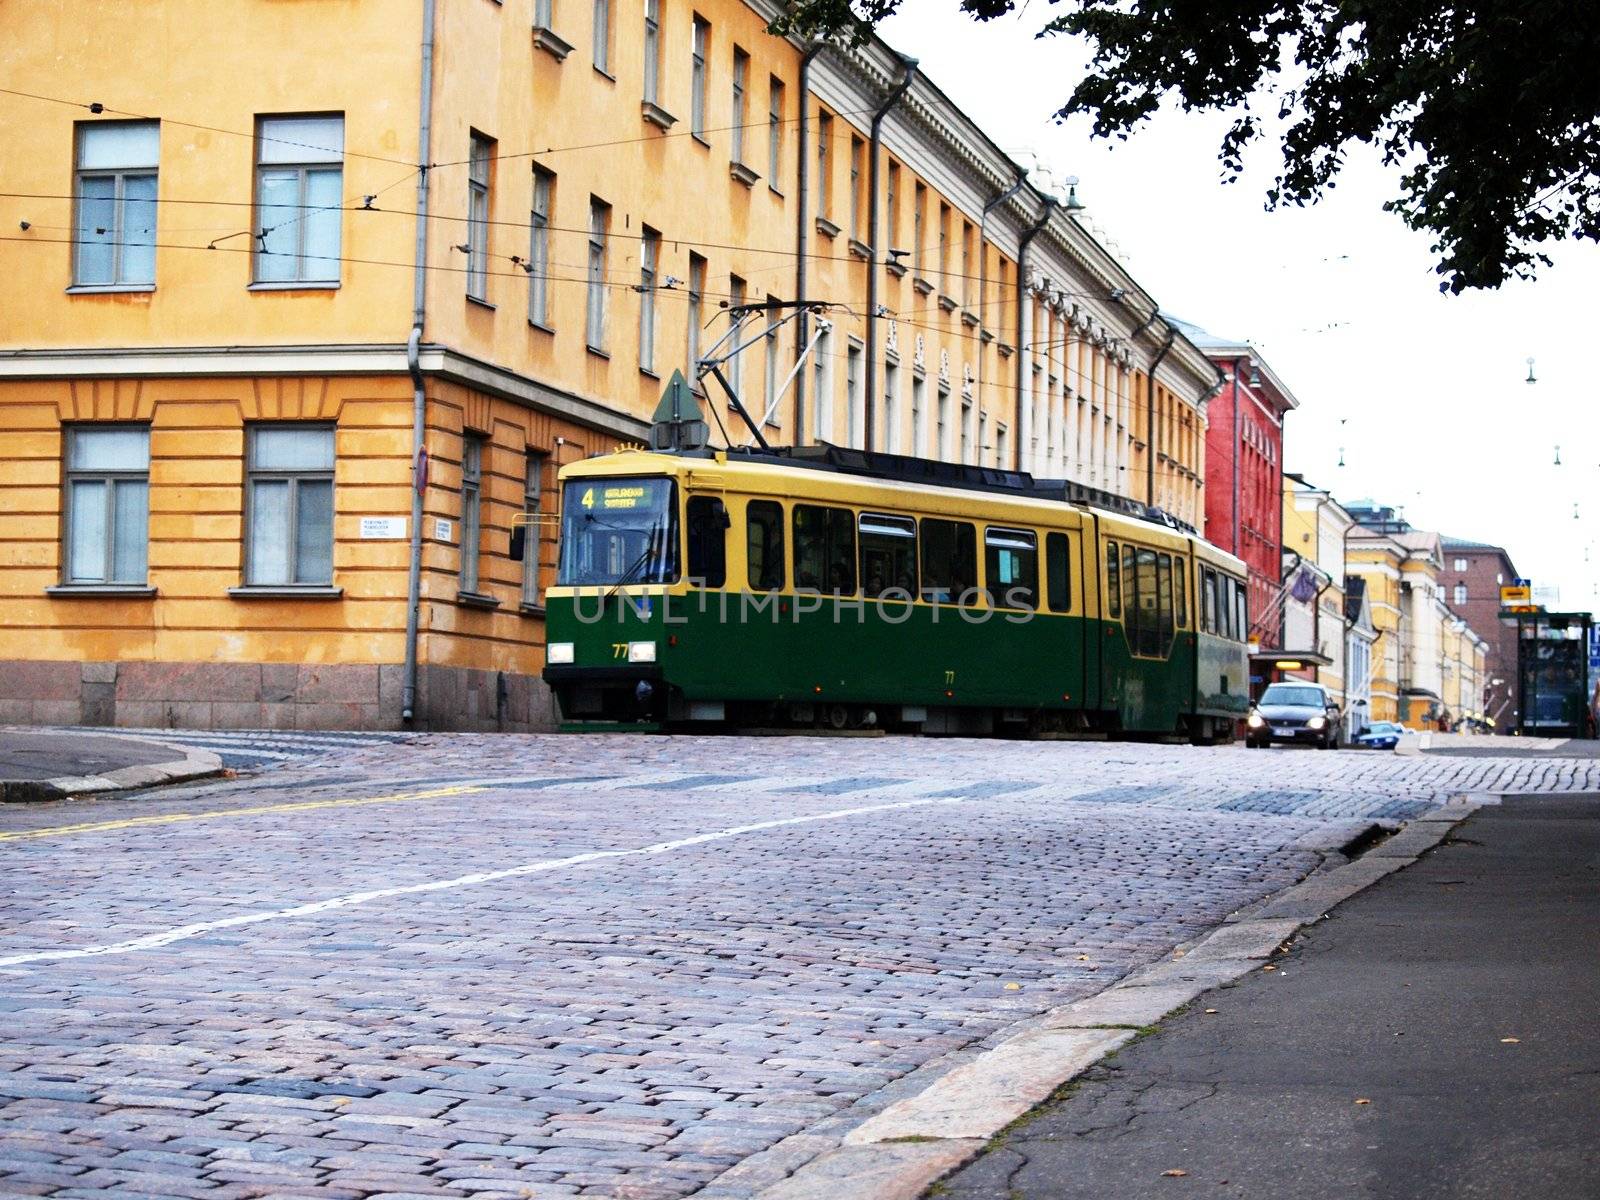 Green old tram in city center of Helsinki Finland